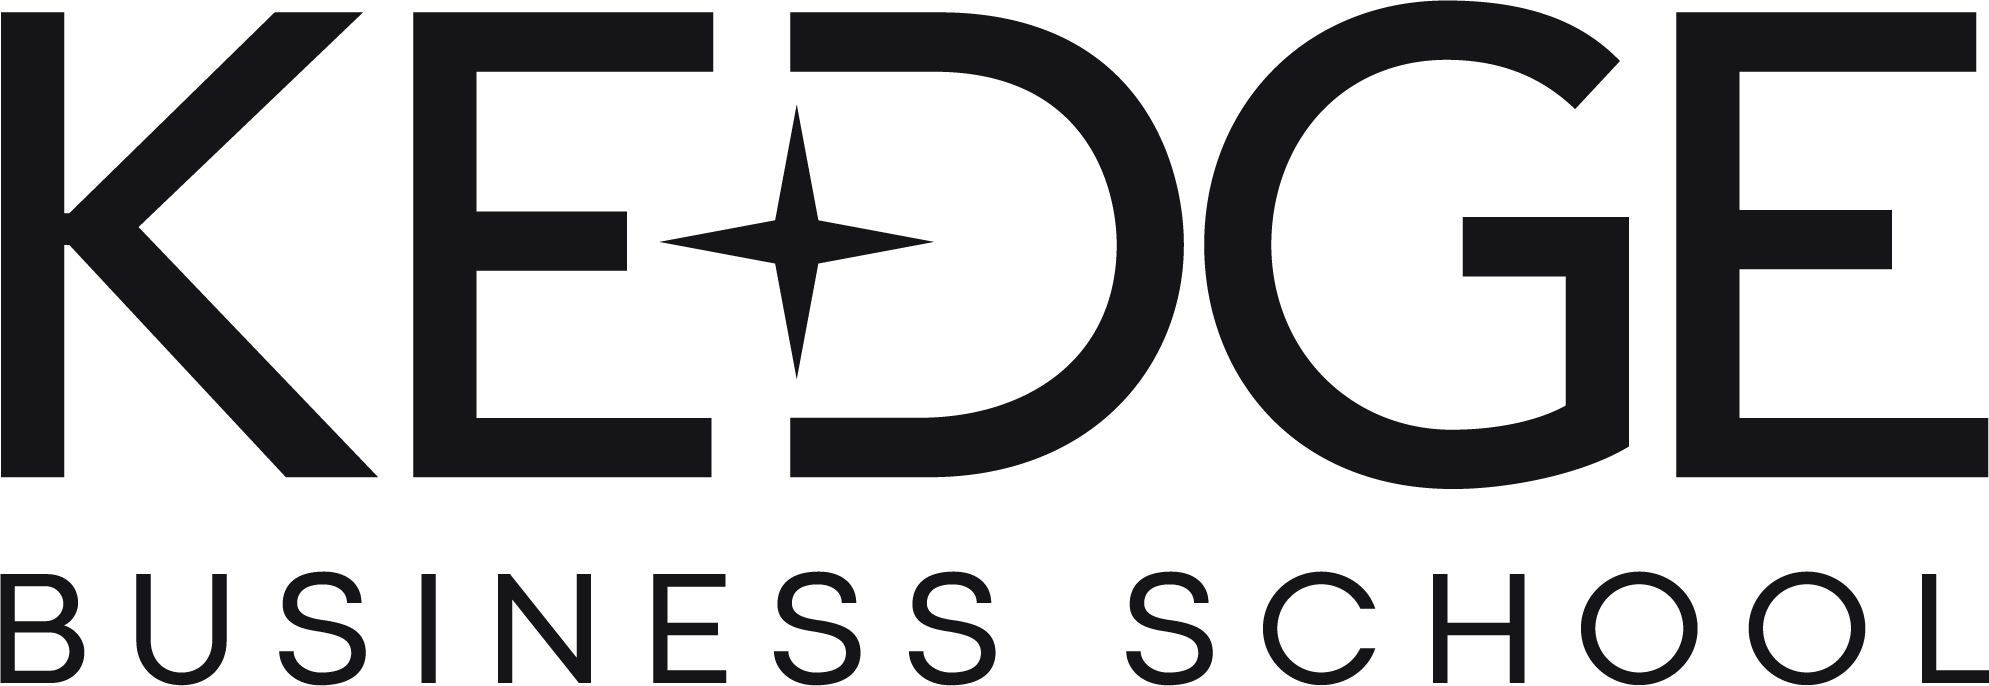 Logo - KEDGE BUSINESS SCHOOL - Label NR